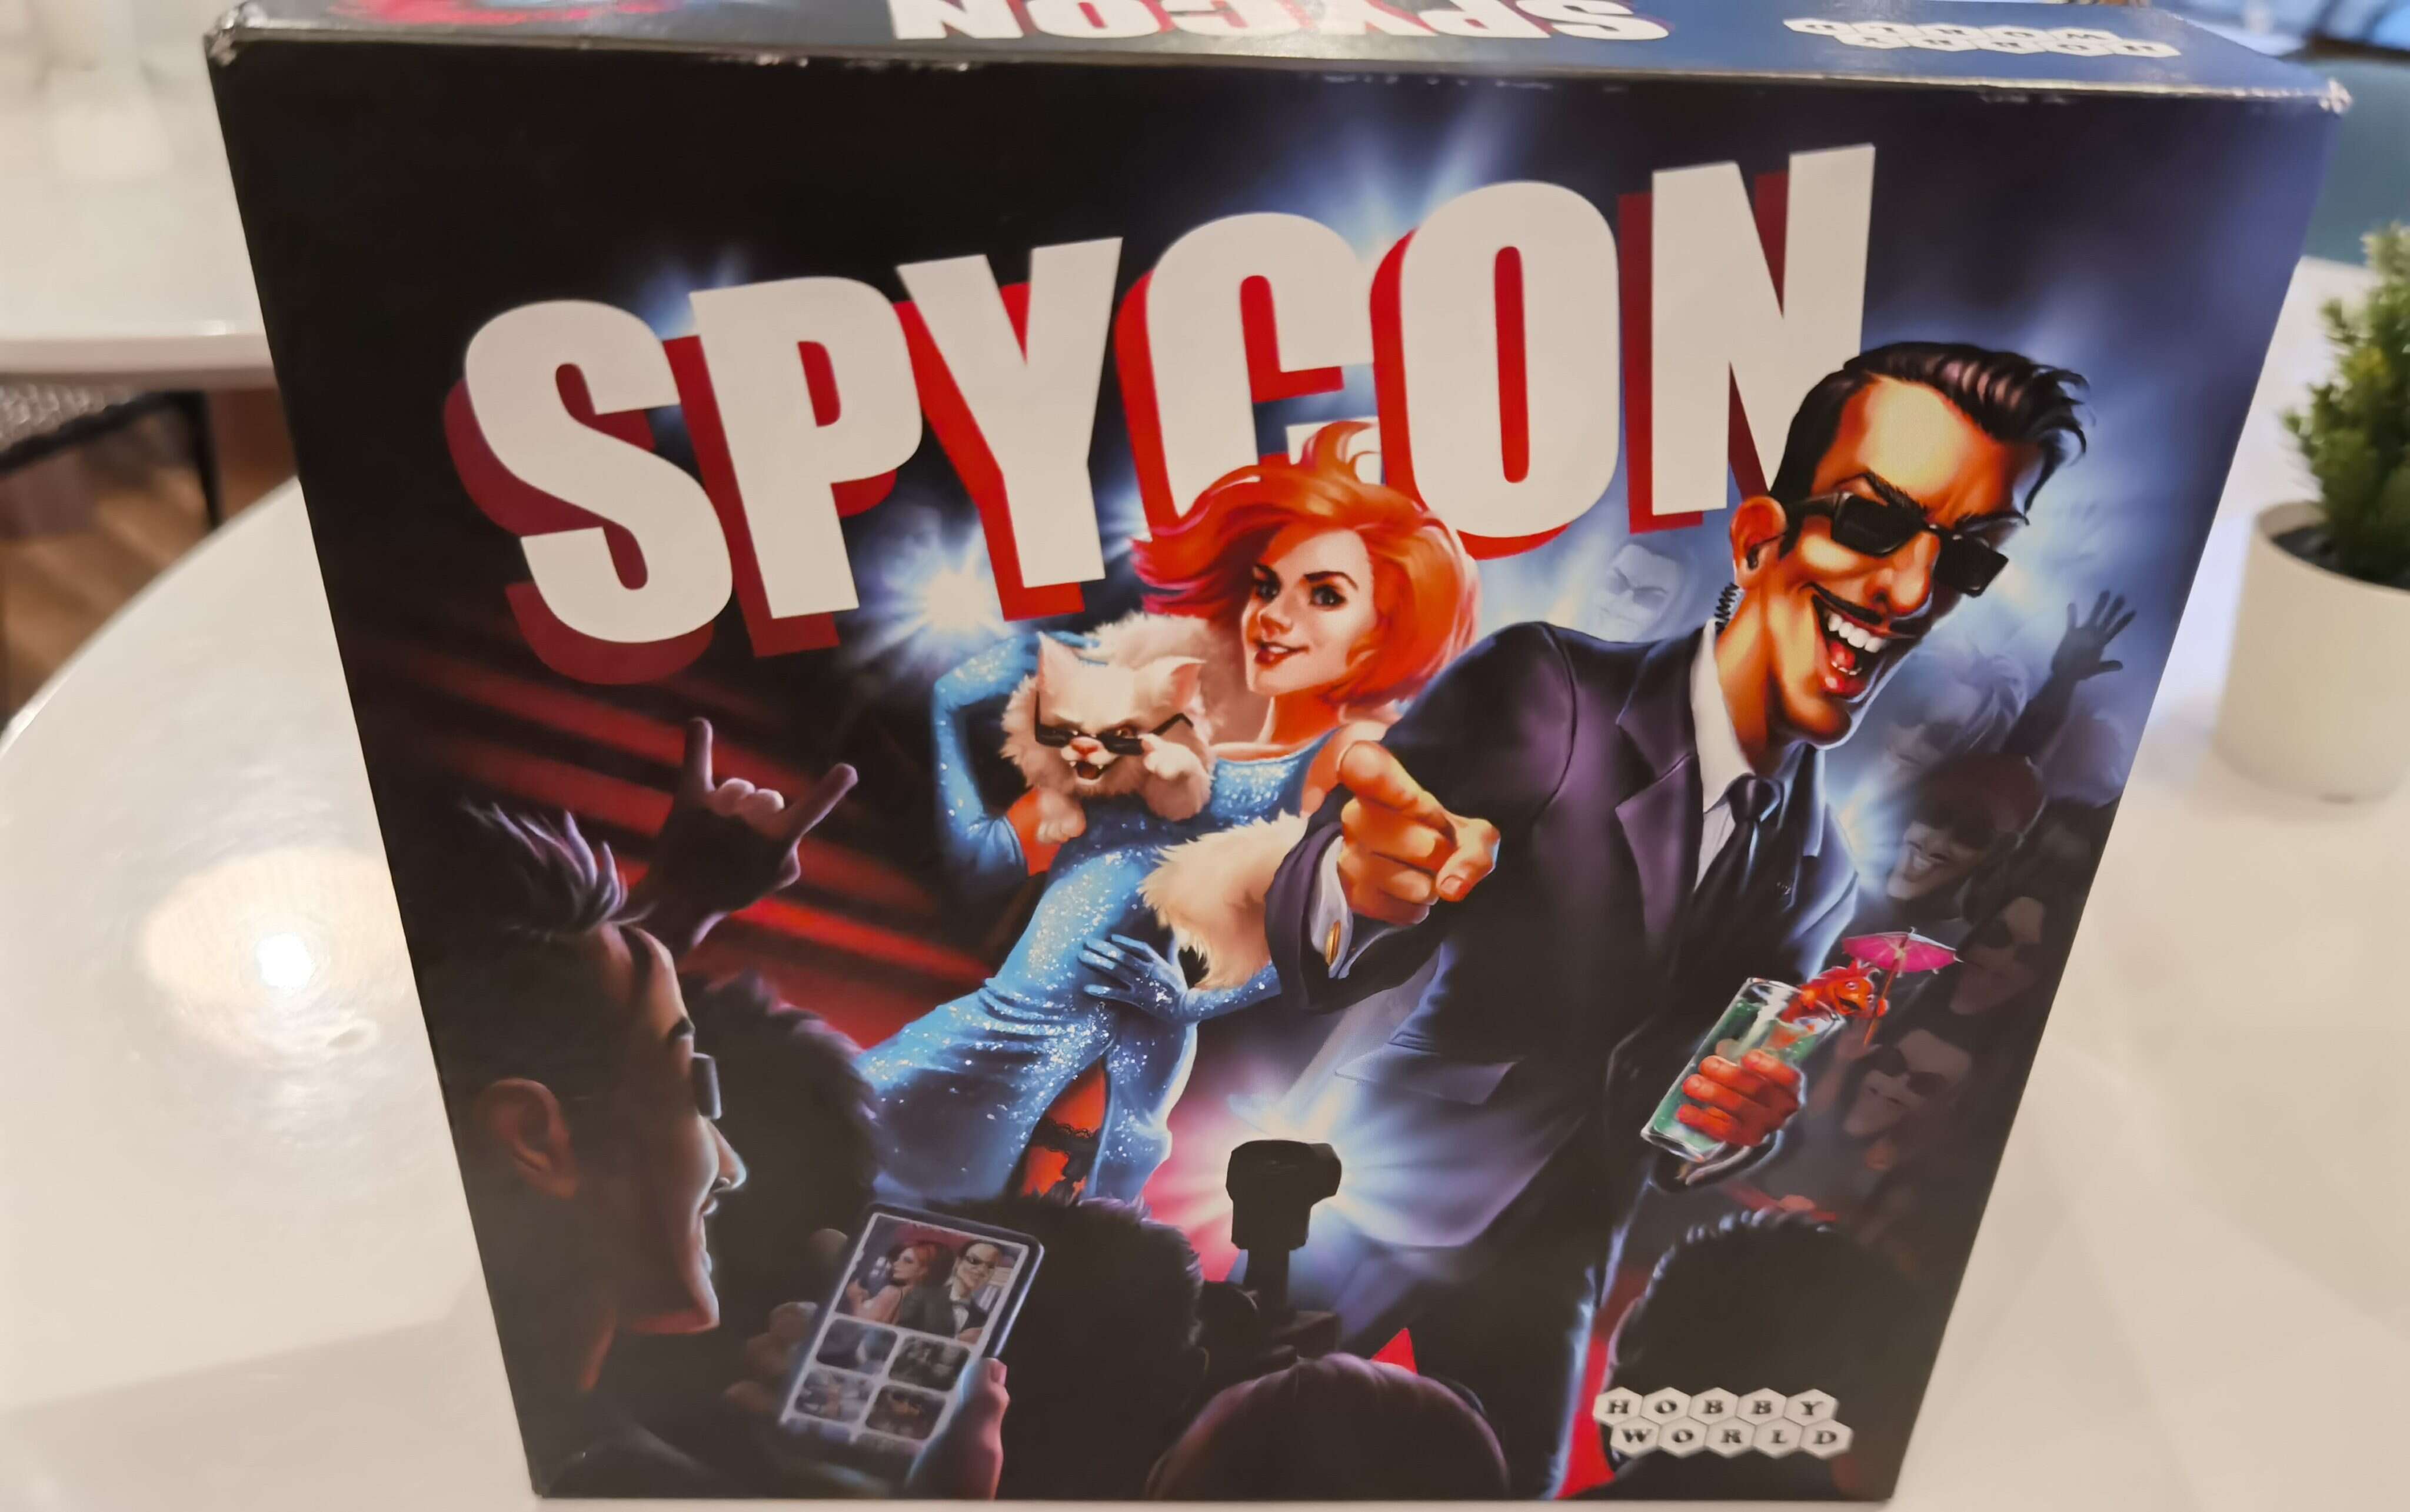 Spycon – Не. Няма нищо общо със SpyFall